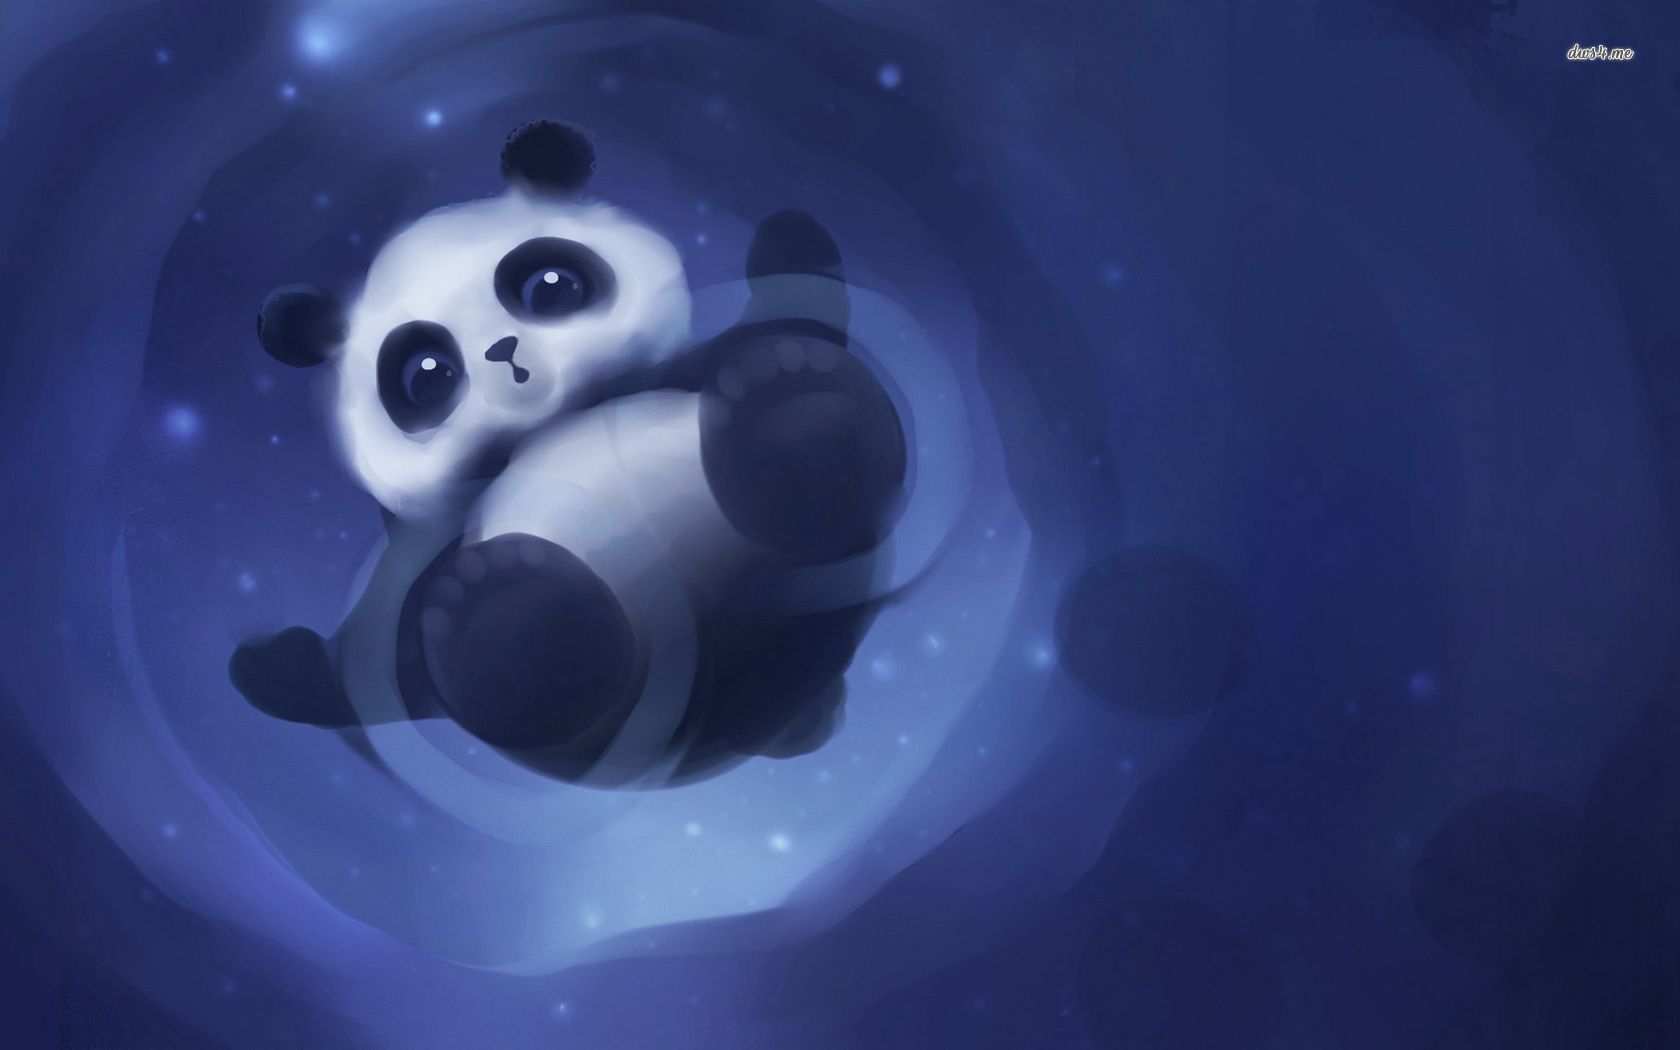 Cute baby panda playing in the puddle wallpaper - Digital Art ...